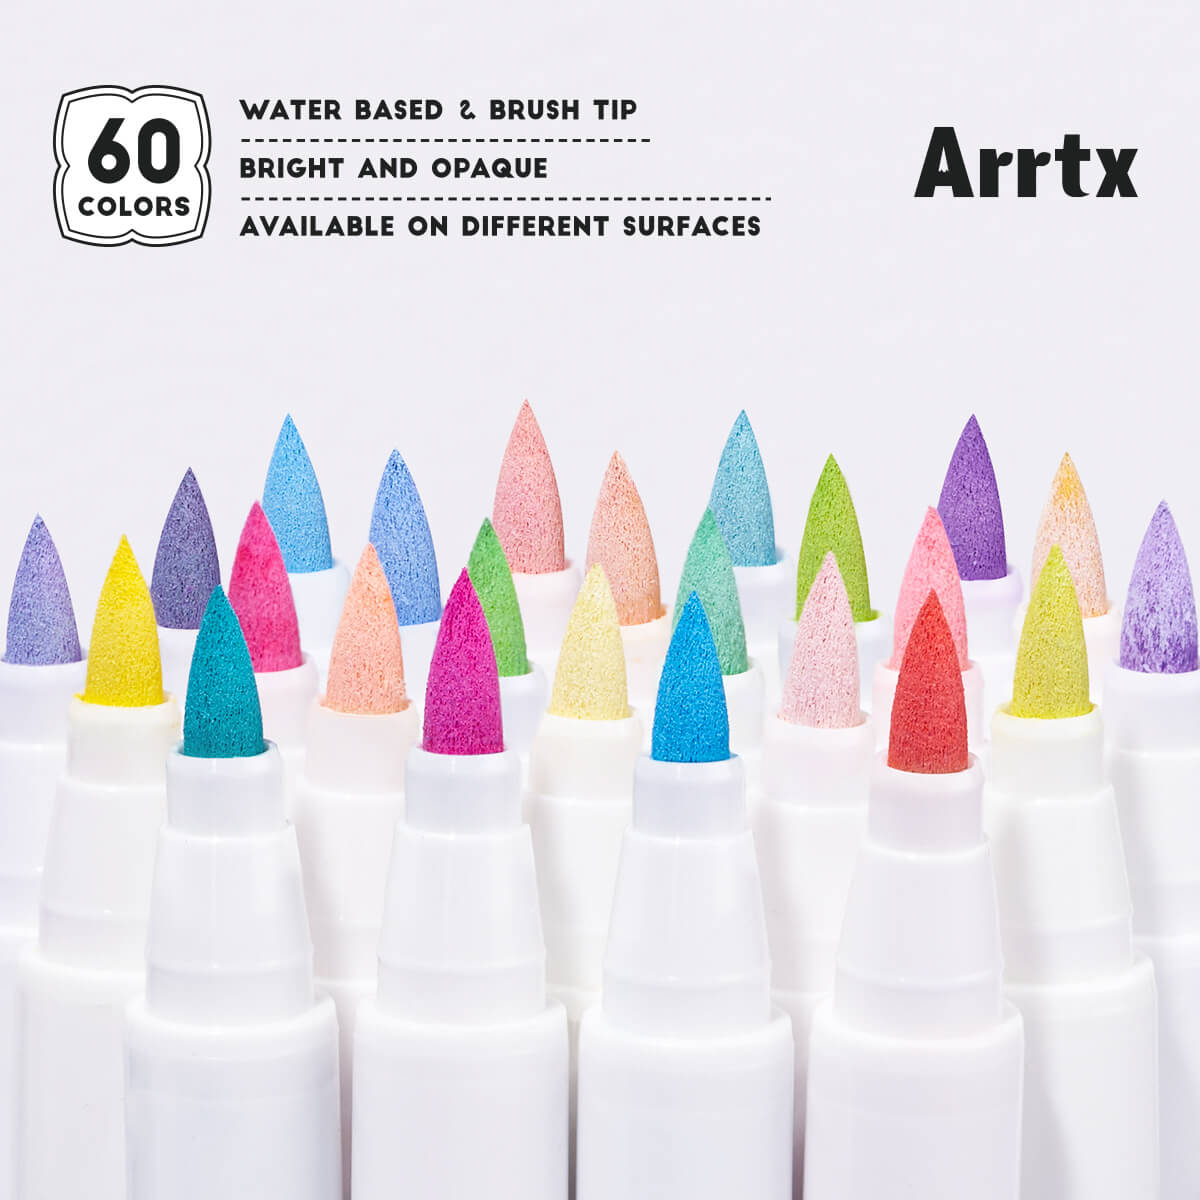 Arrtx Paint Pens 60 Anime Colors Acrylic Marker Brush Tip Art Supplies 60B